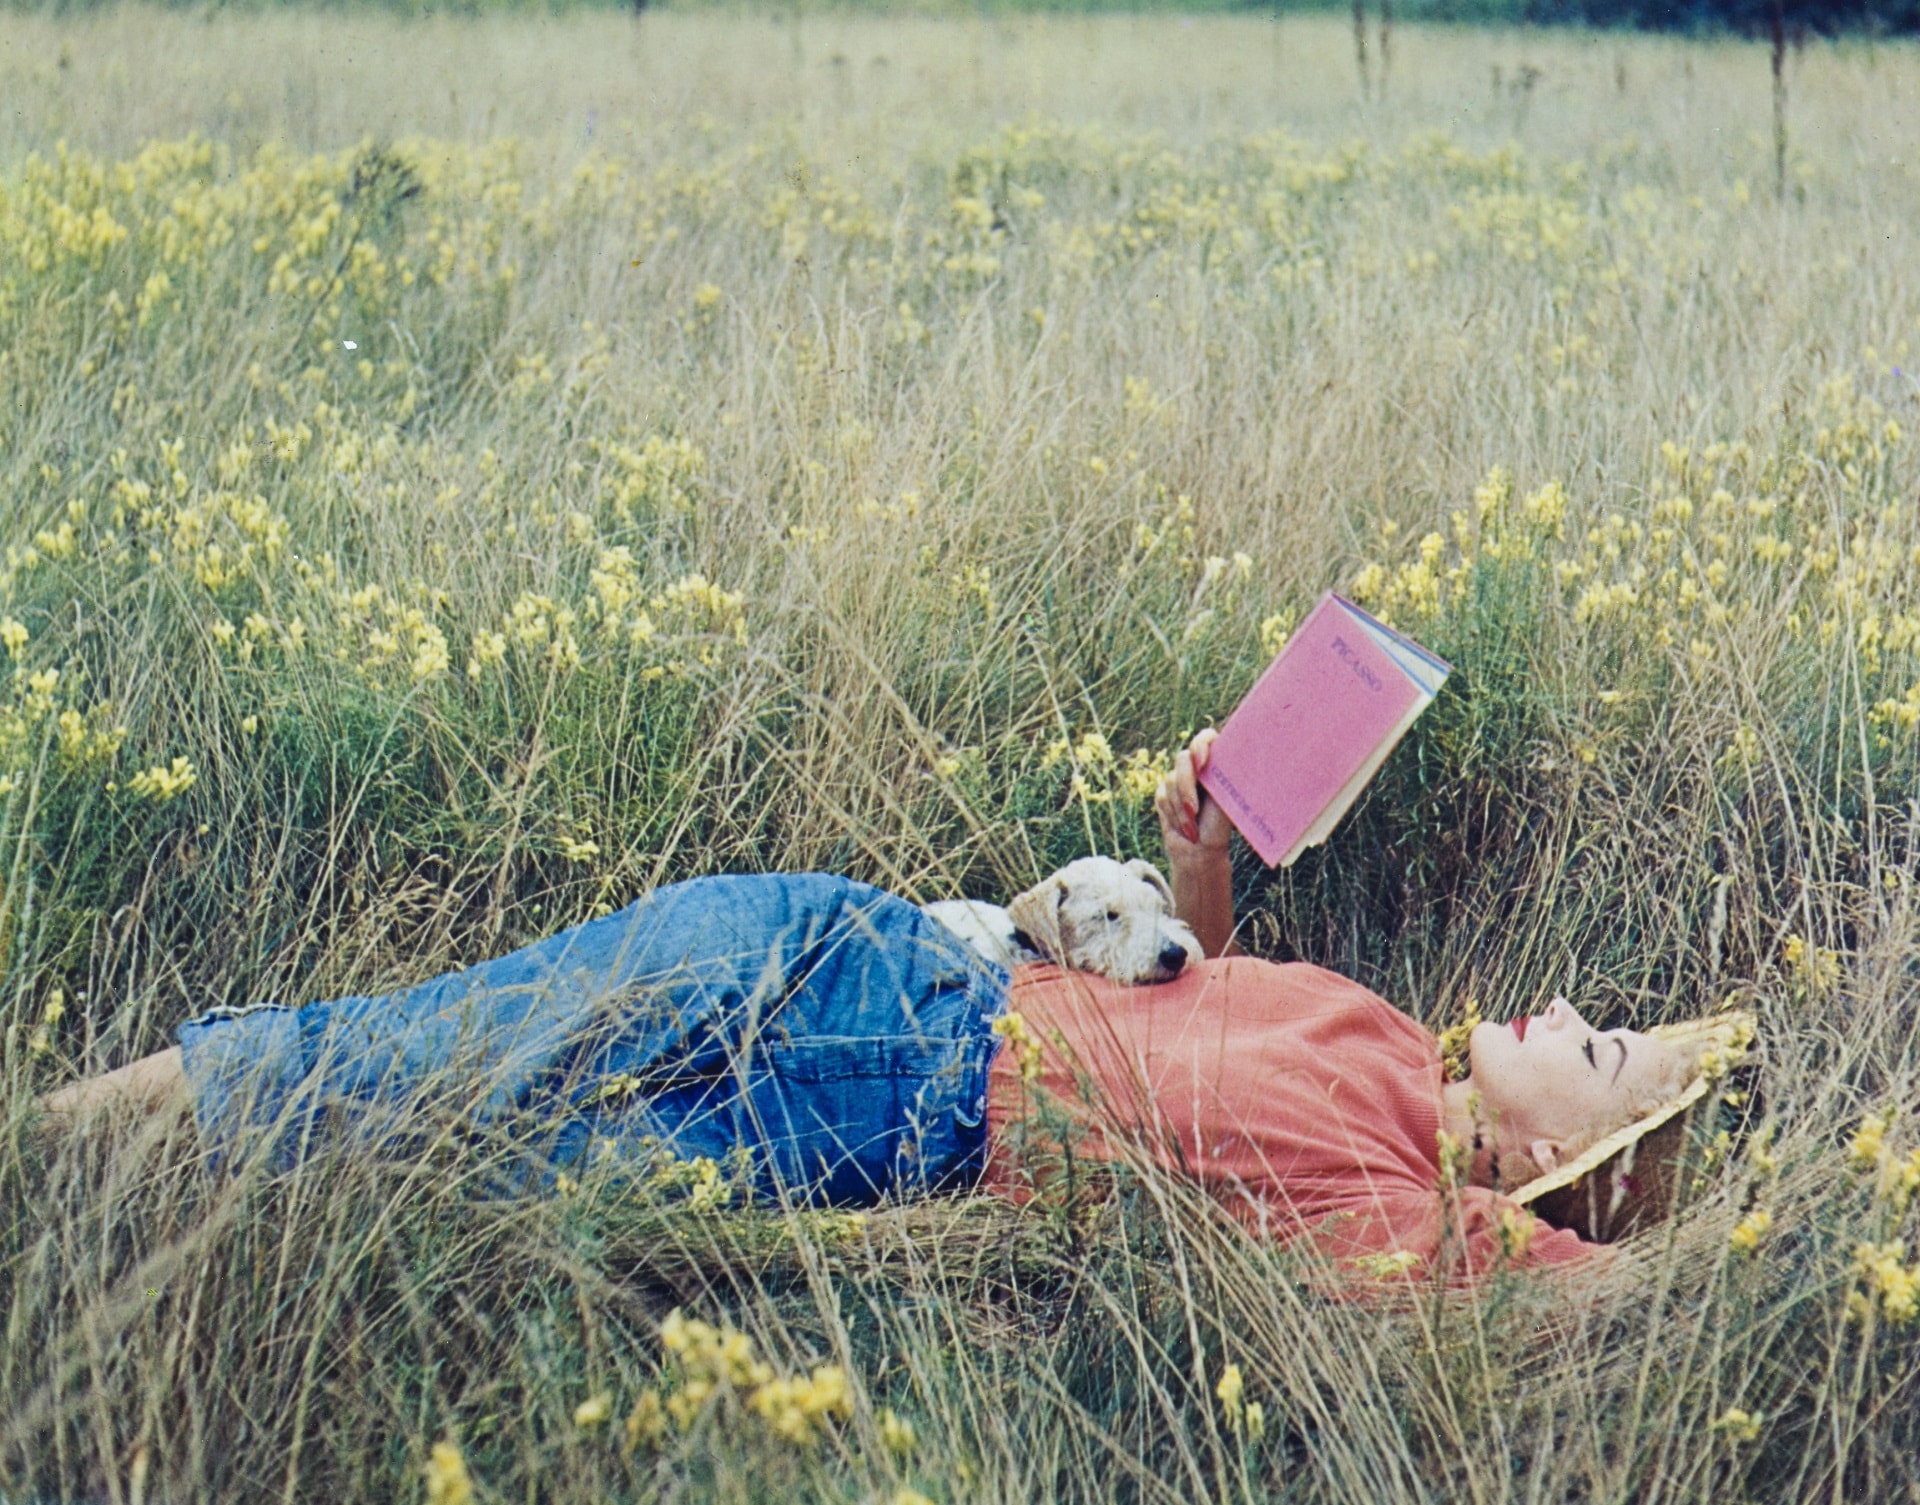 Irving Penn, Lisa Fonssagrives-Penn sdraiata sull’erba, legge il libro su Picasso di Gertrude Stein, 1952, Vogue © Condé Nast